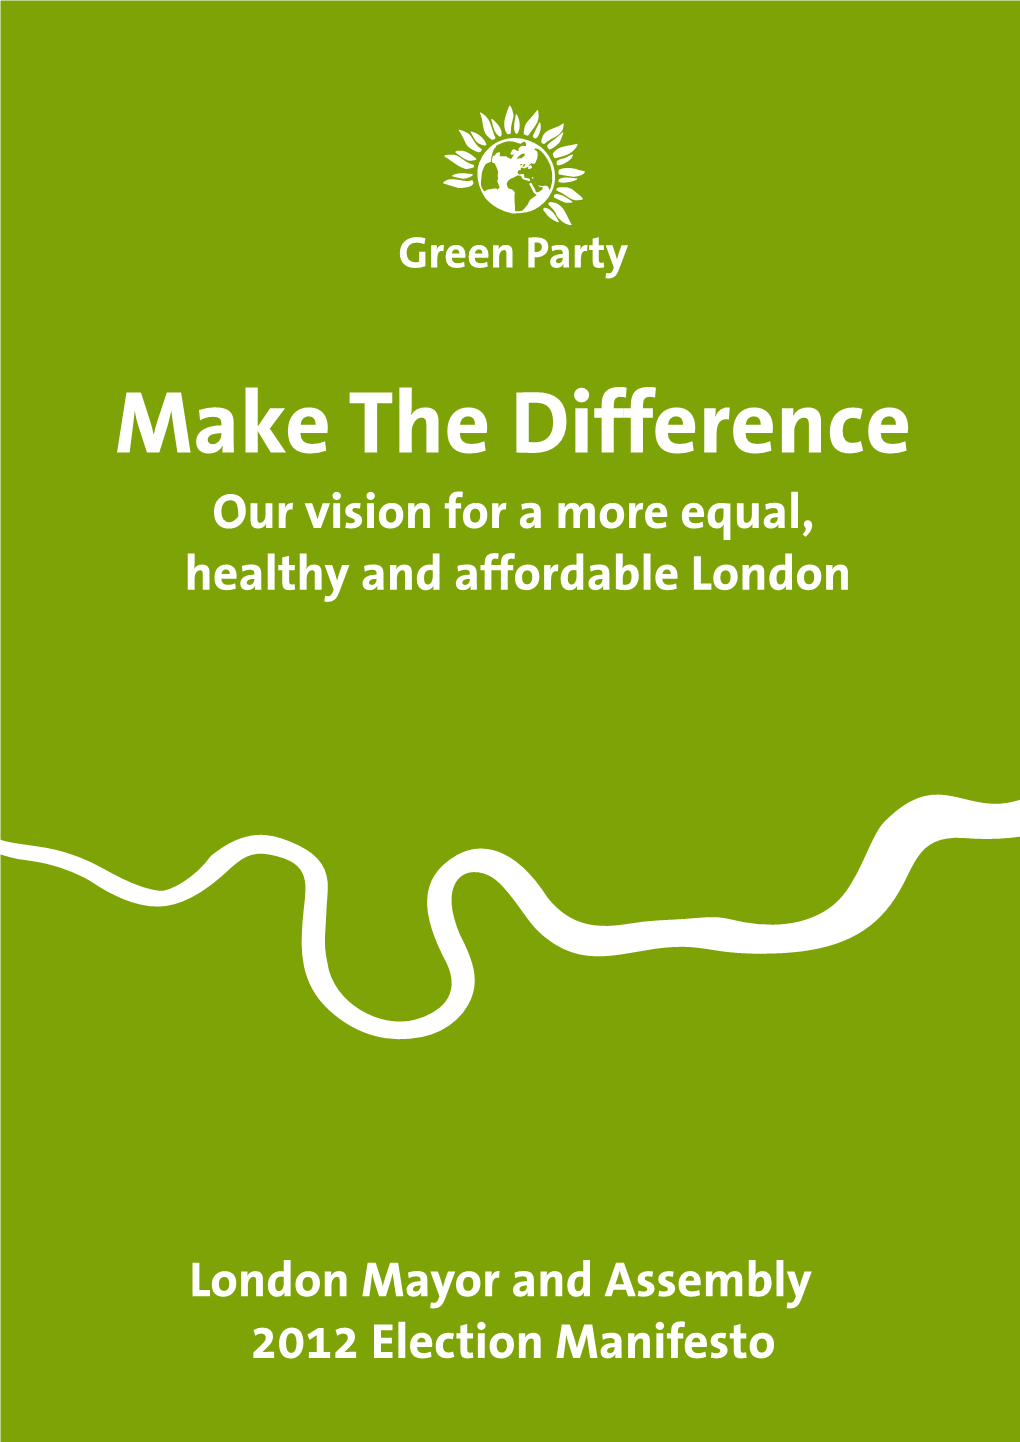 The 2012 Green Party London Manifesto